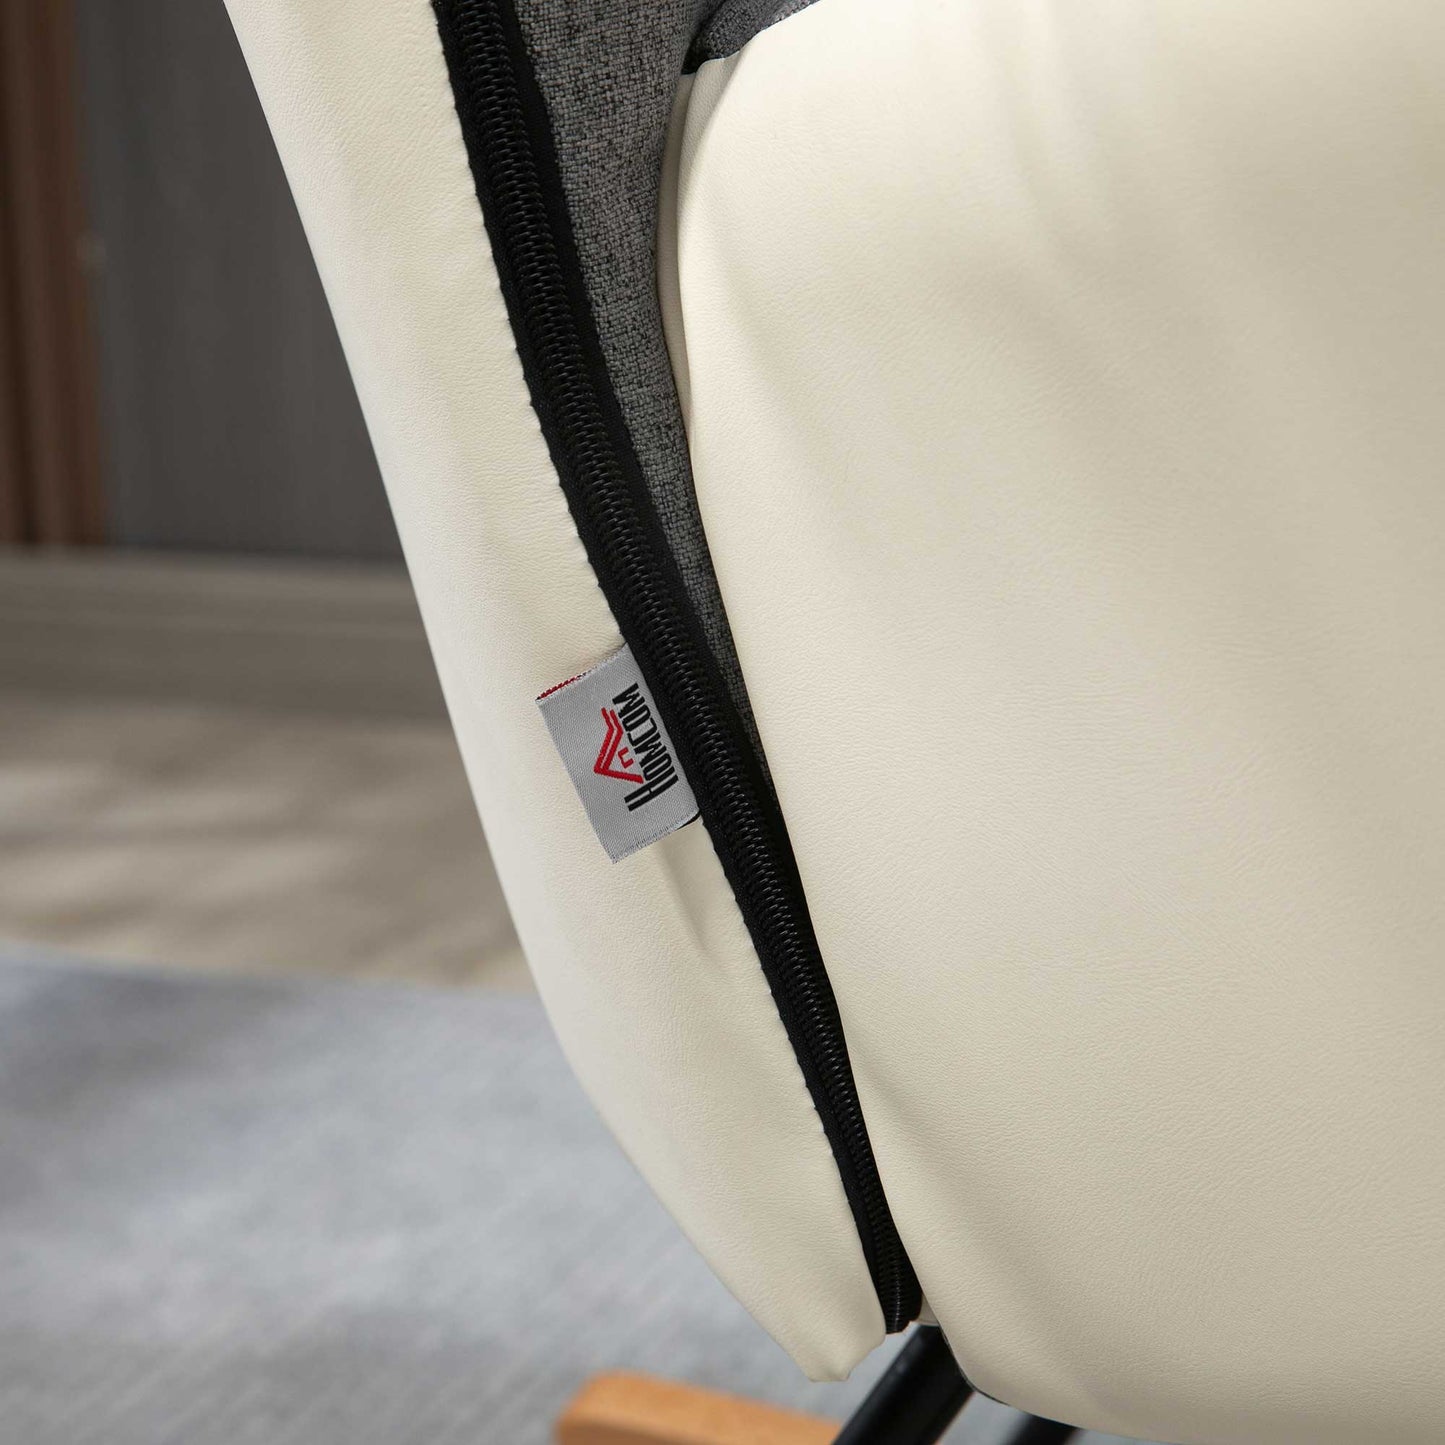 HOMCOM Upholstered Rocking Wingback Armchair - Grey/Cream